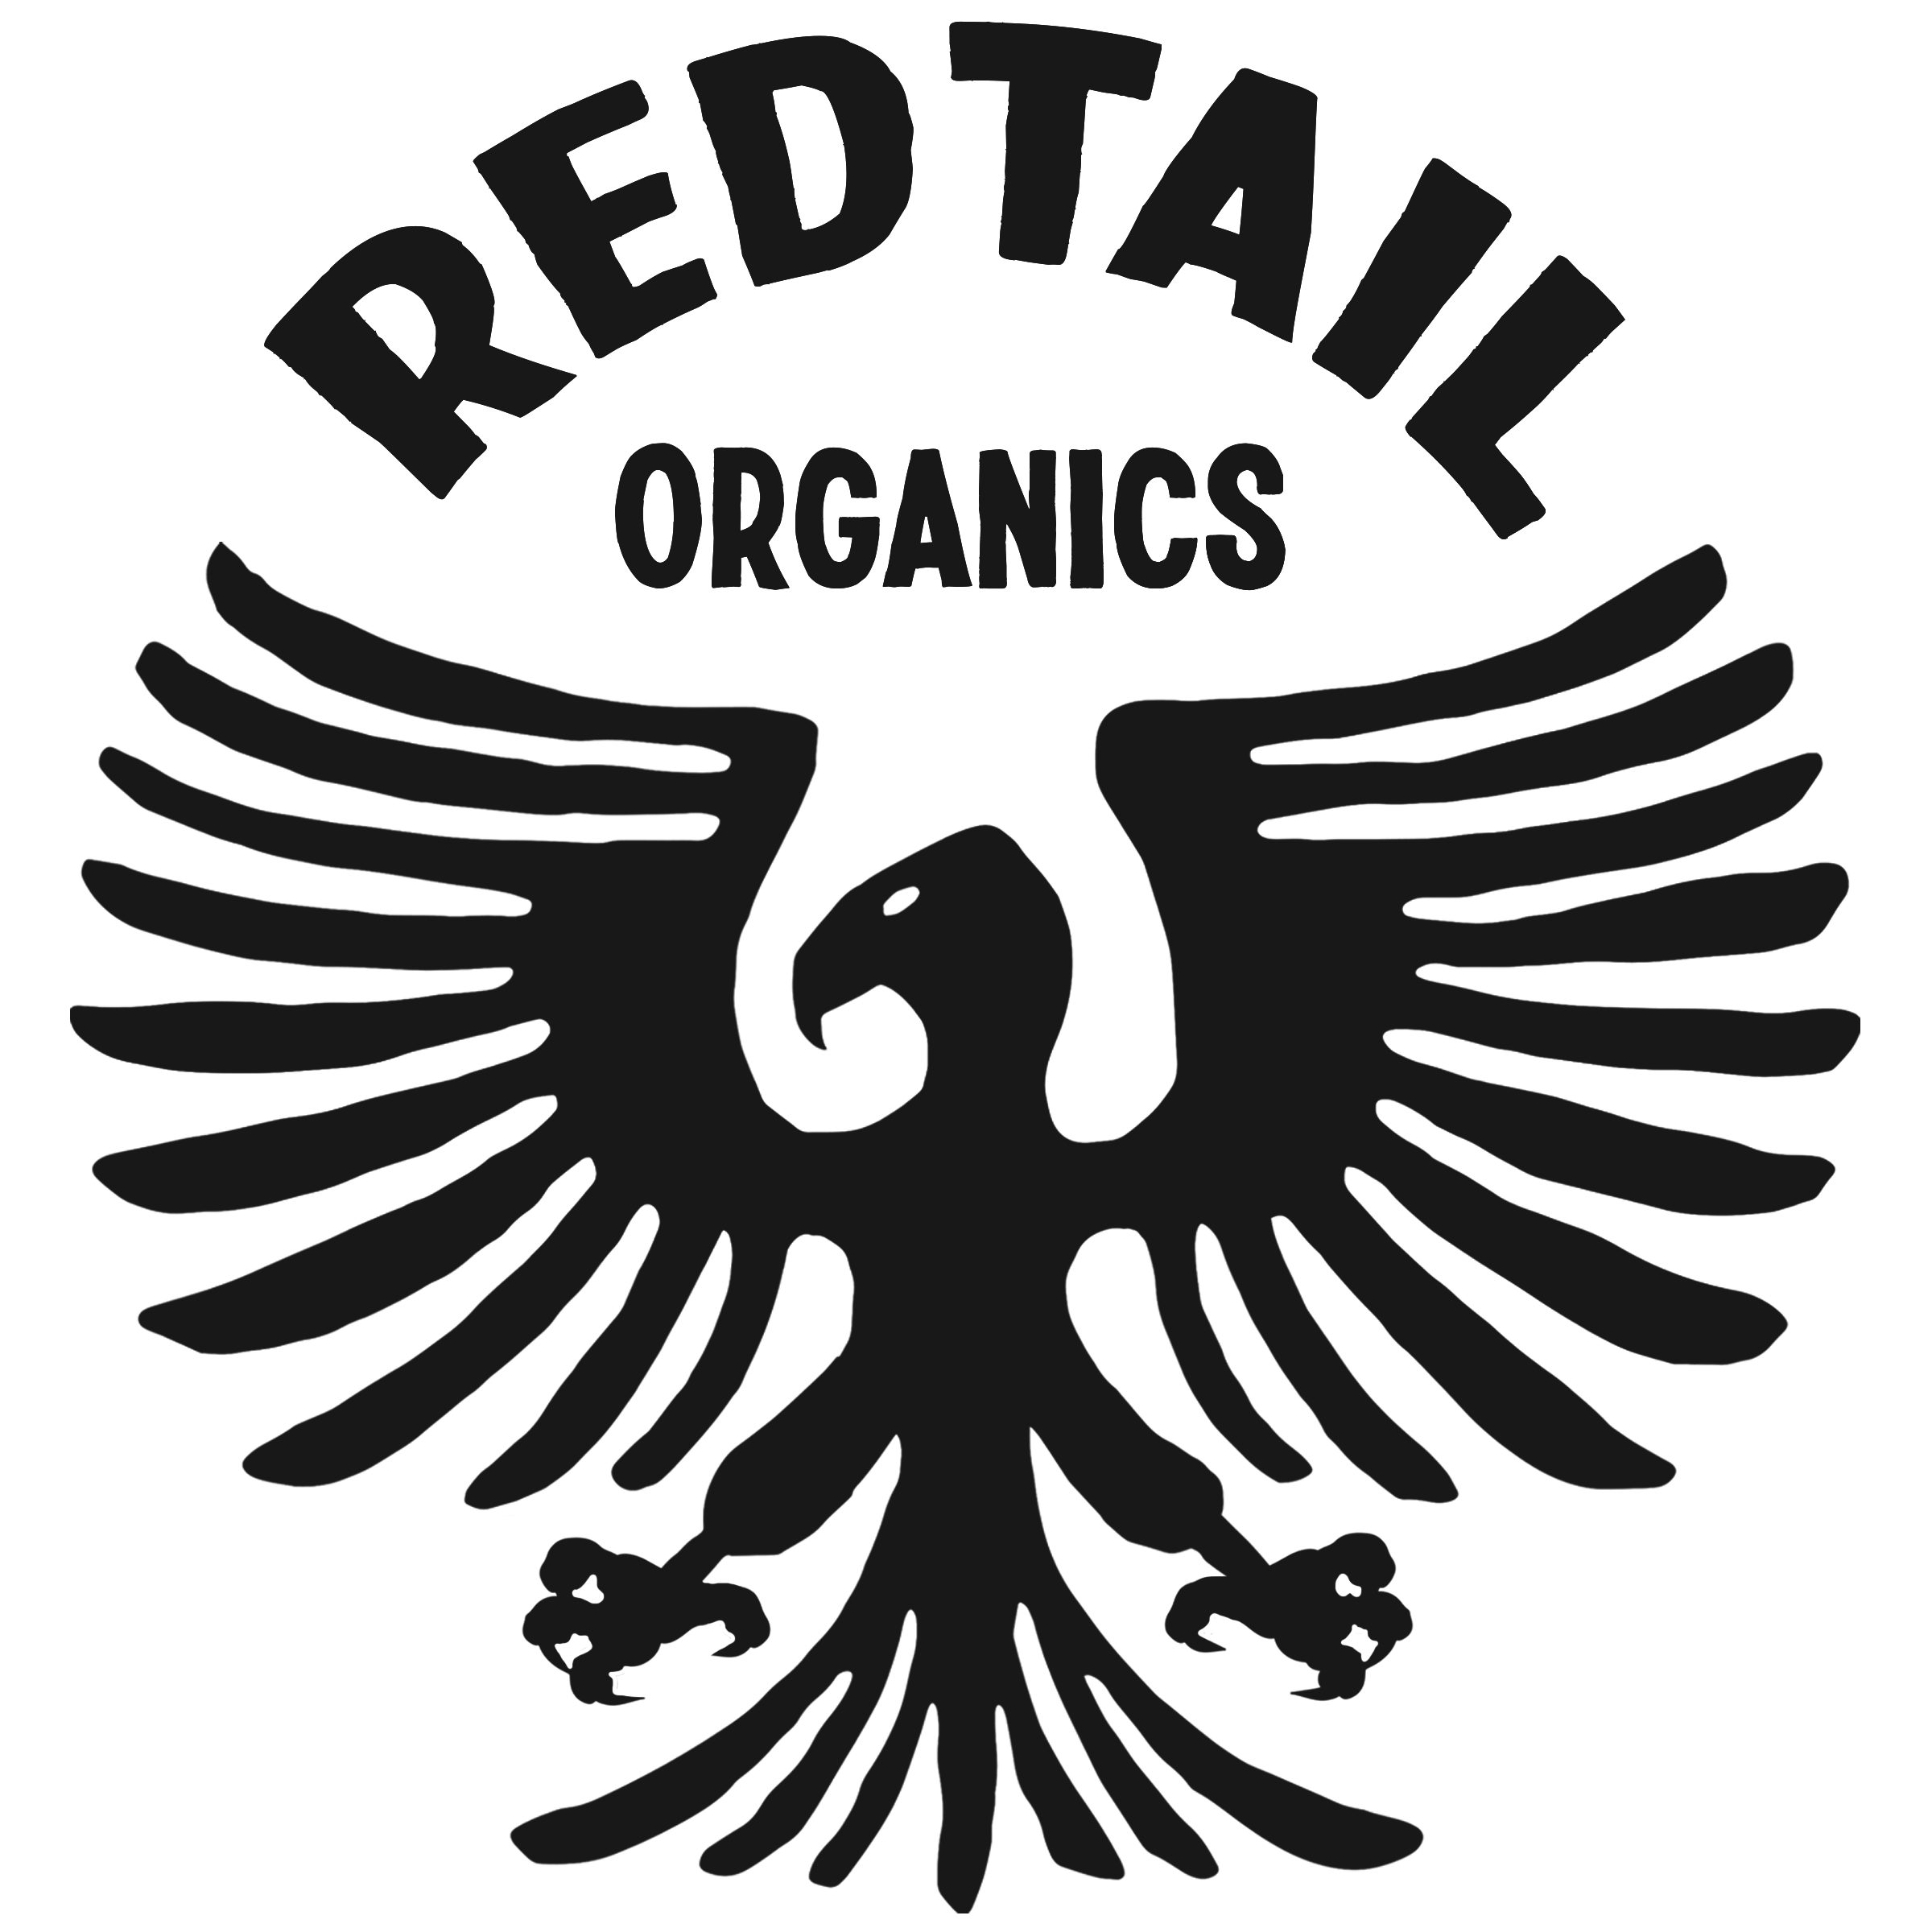 Redtail Organics